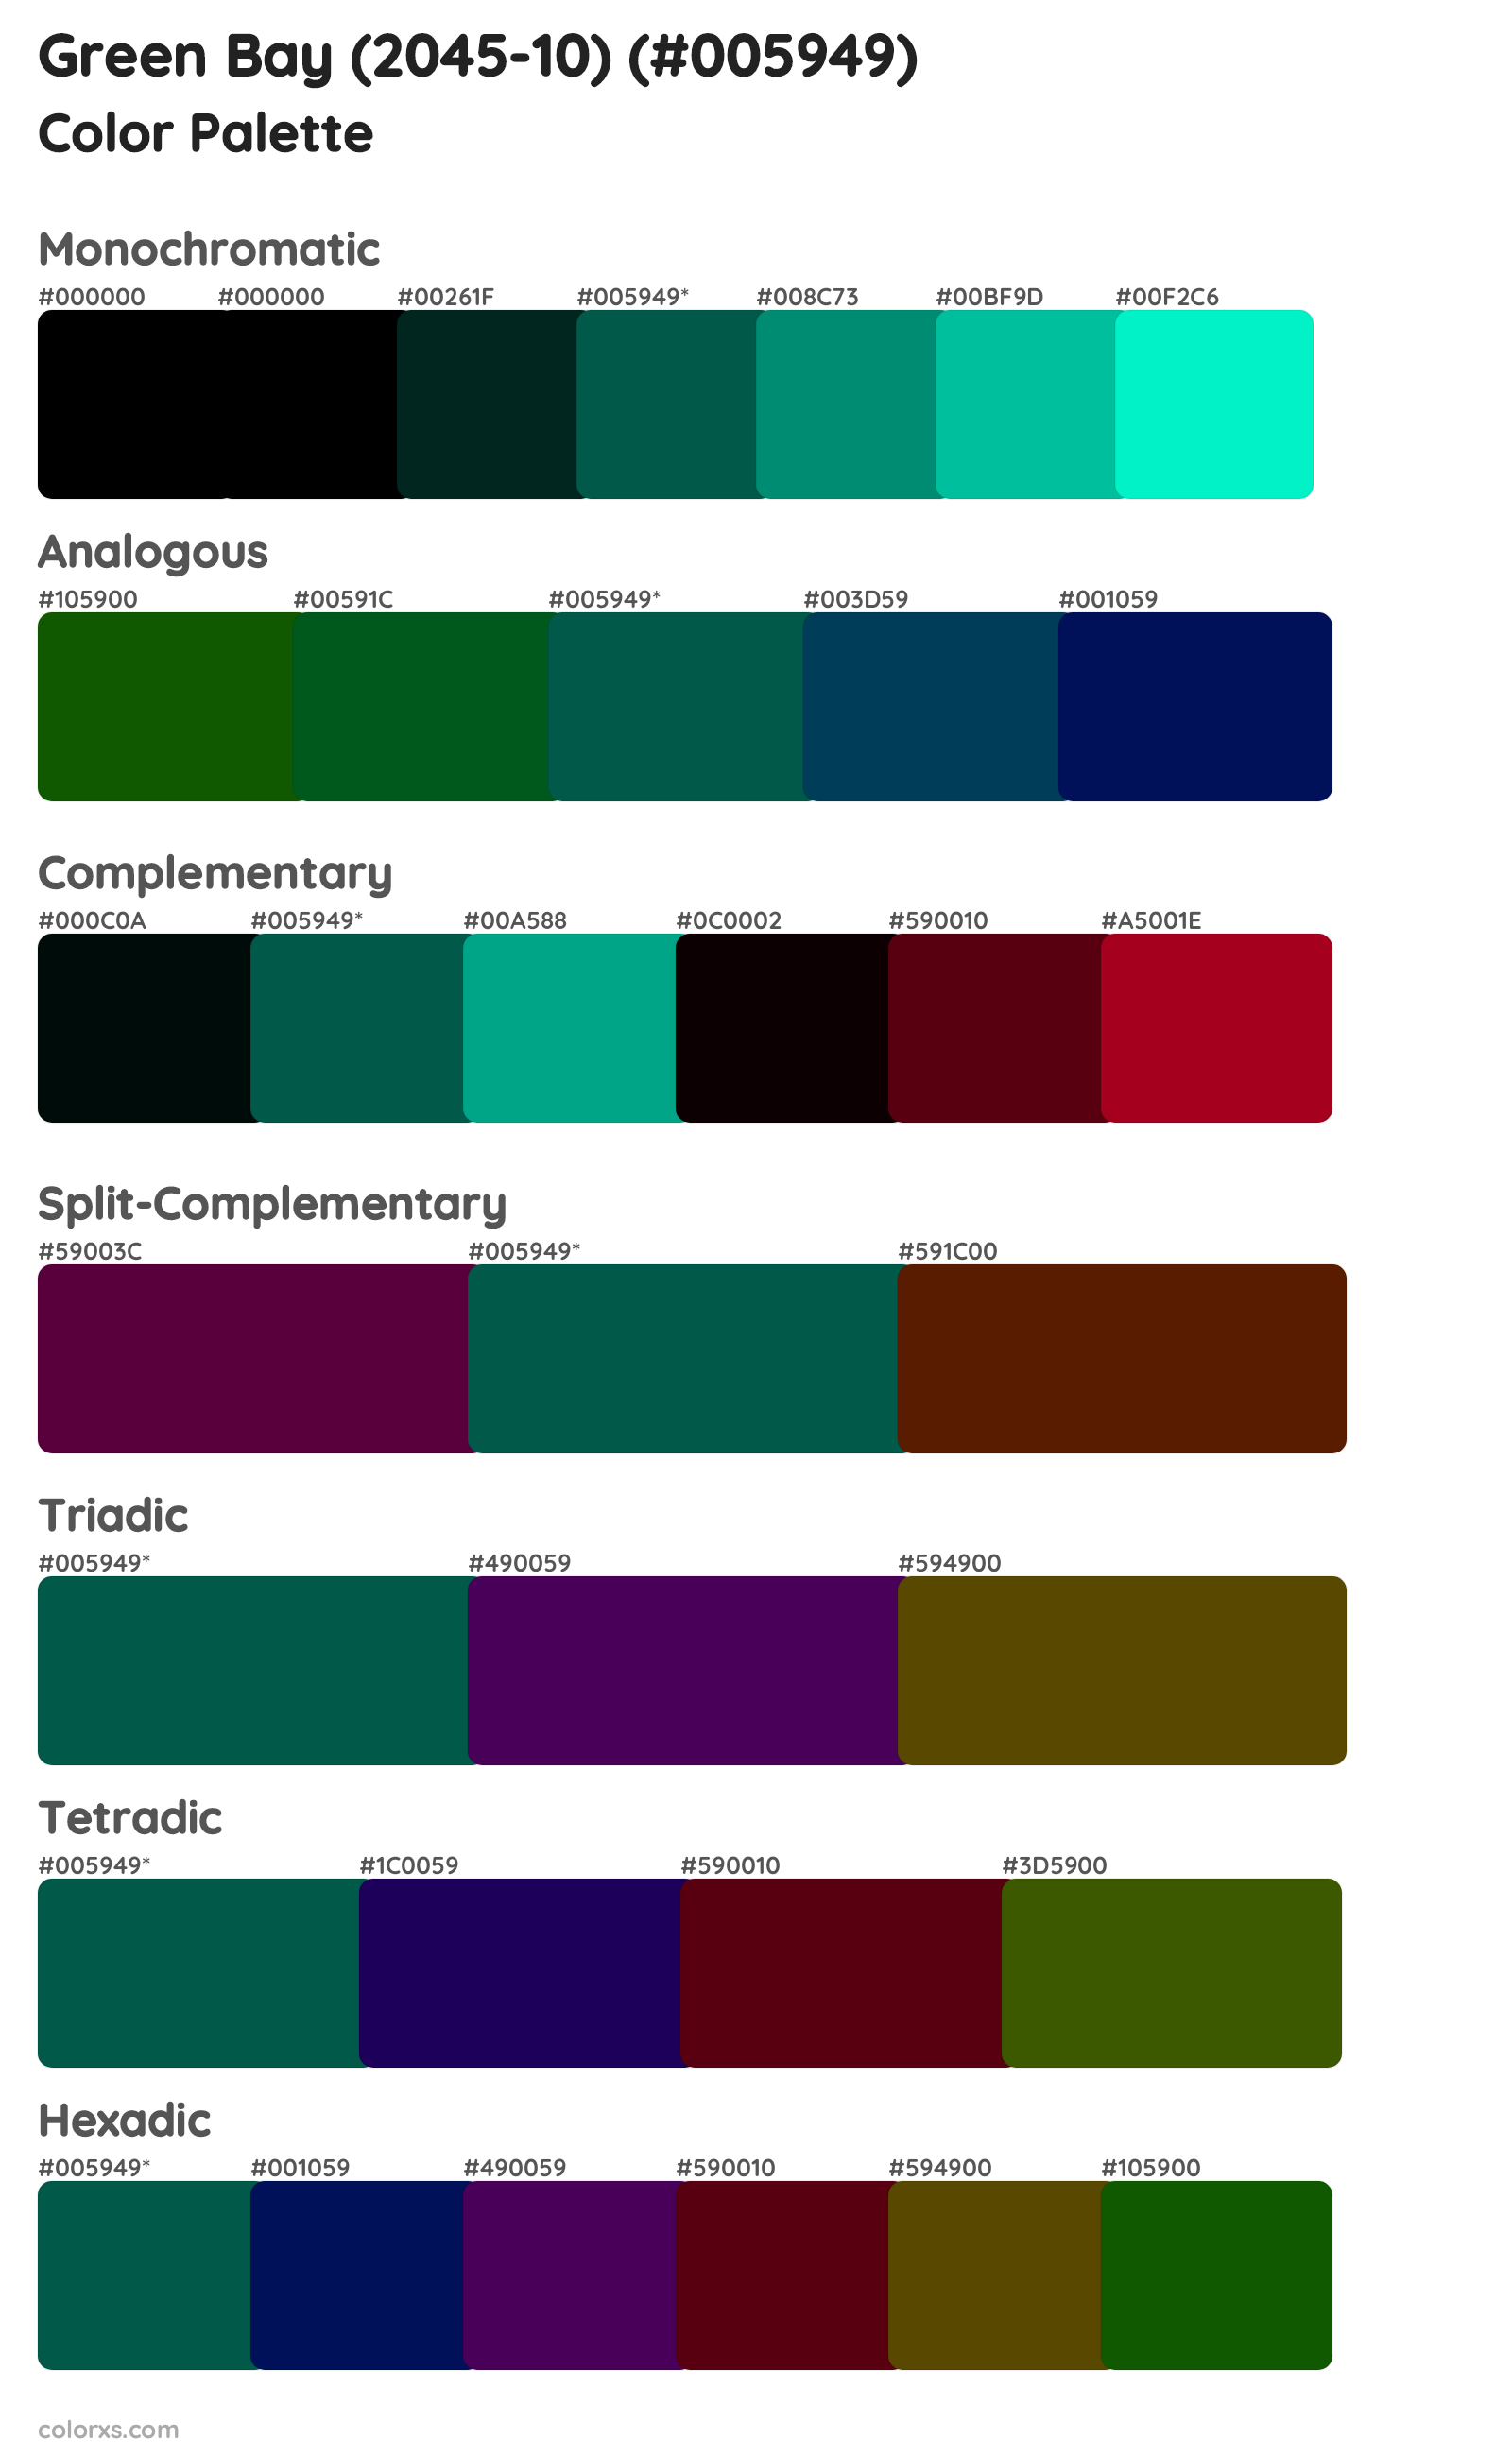 Green Bay (2045-10) Color Scheme Palettes